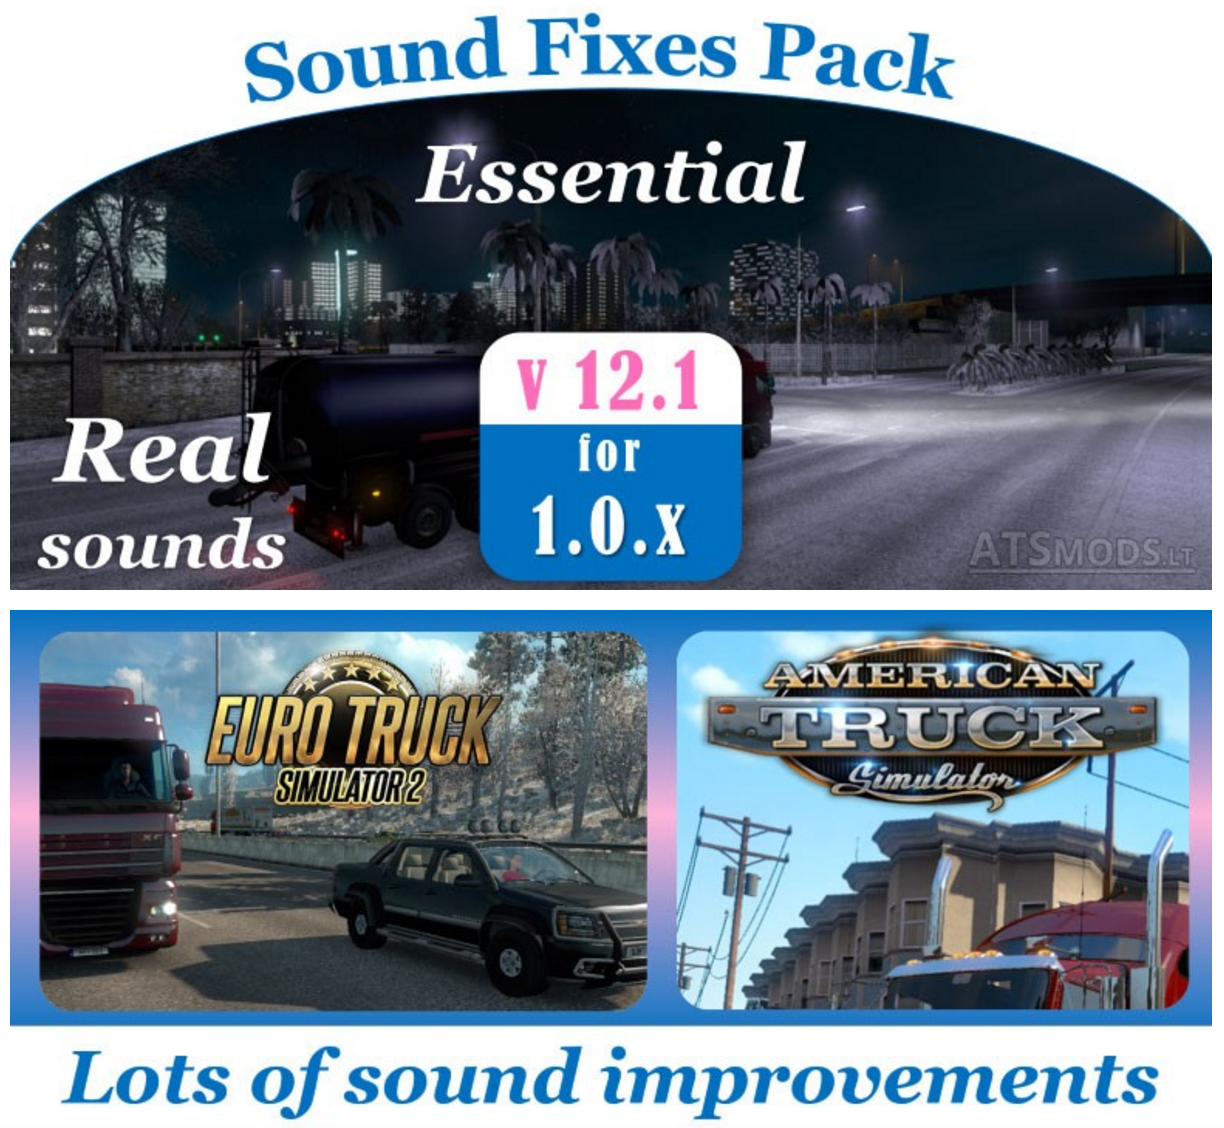 Sound Fixes Pack v 12.1